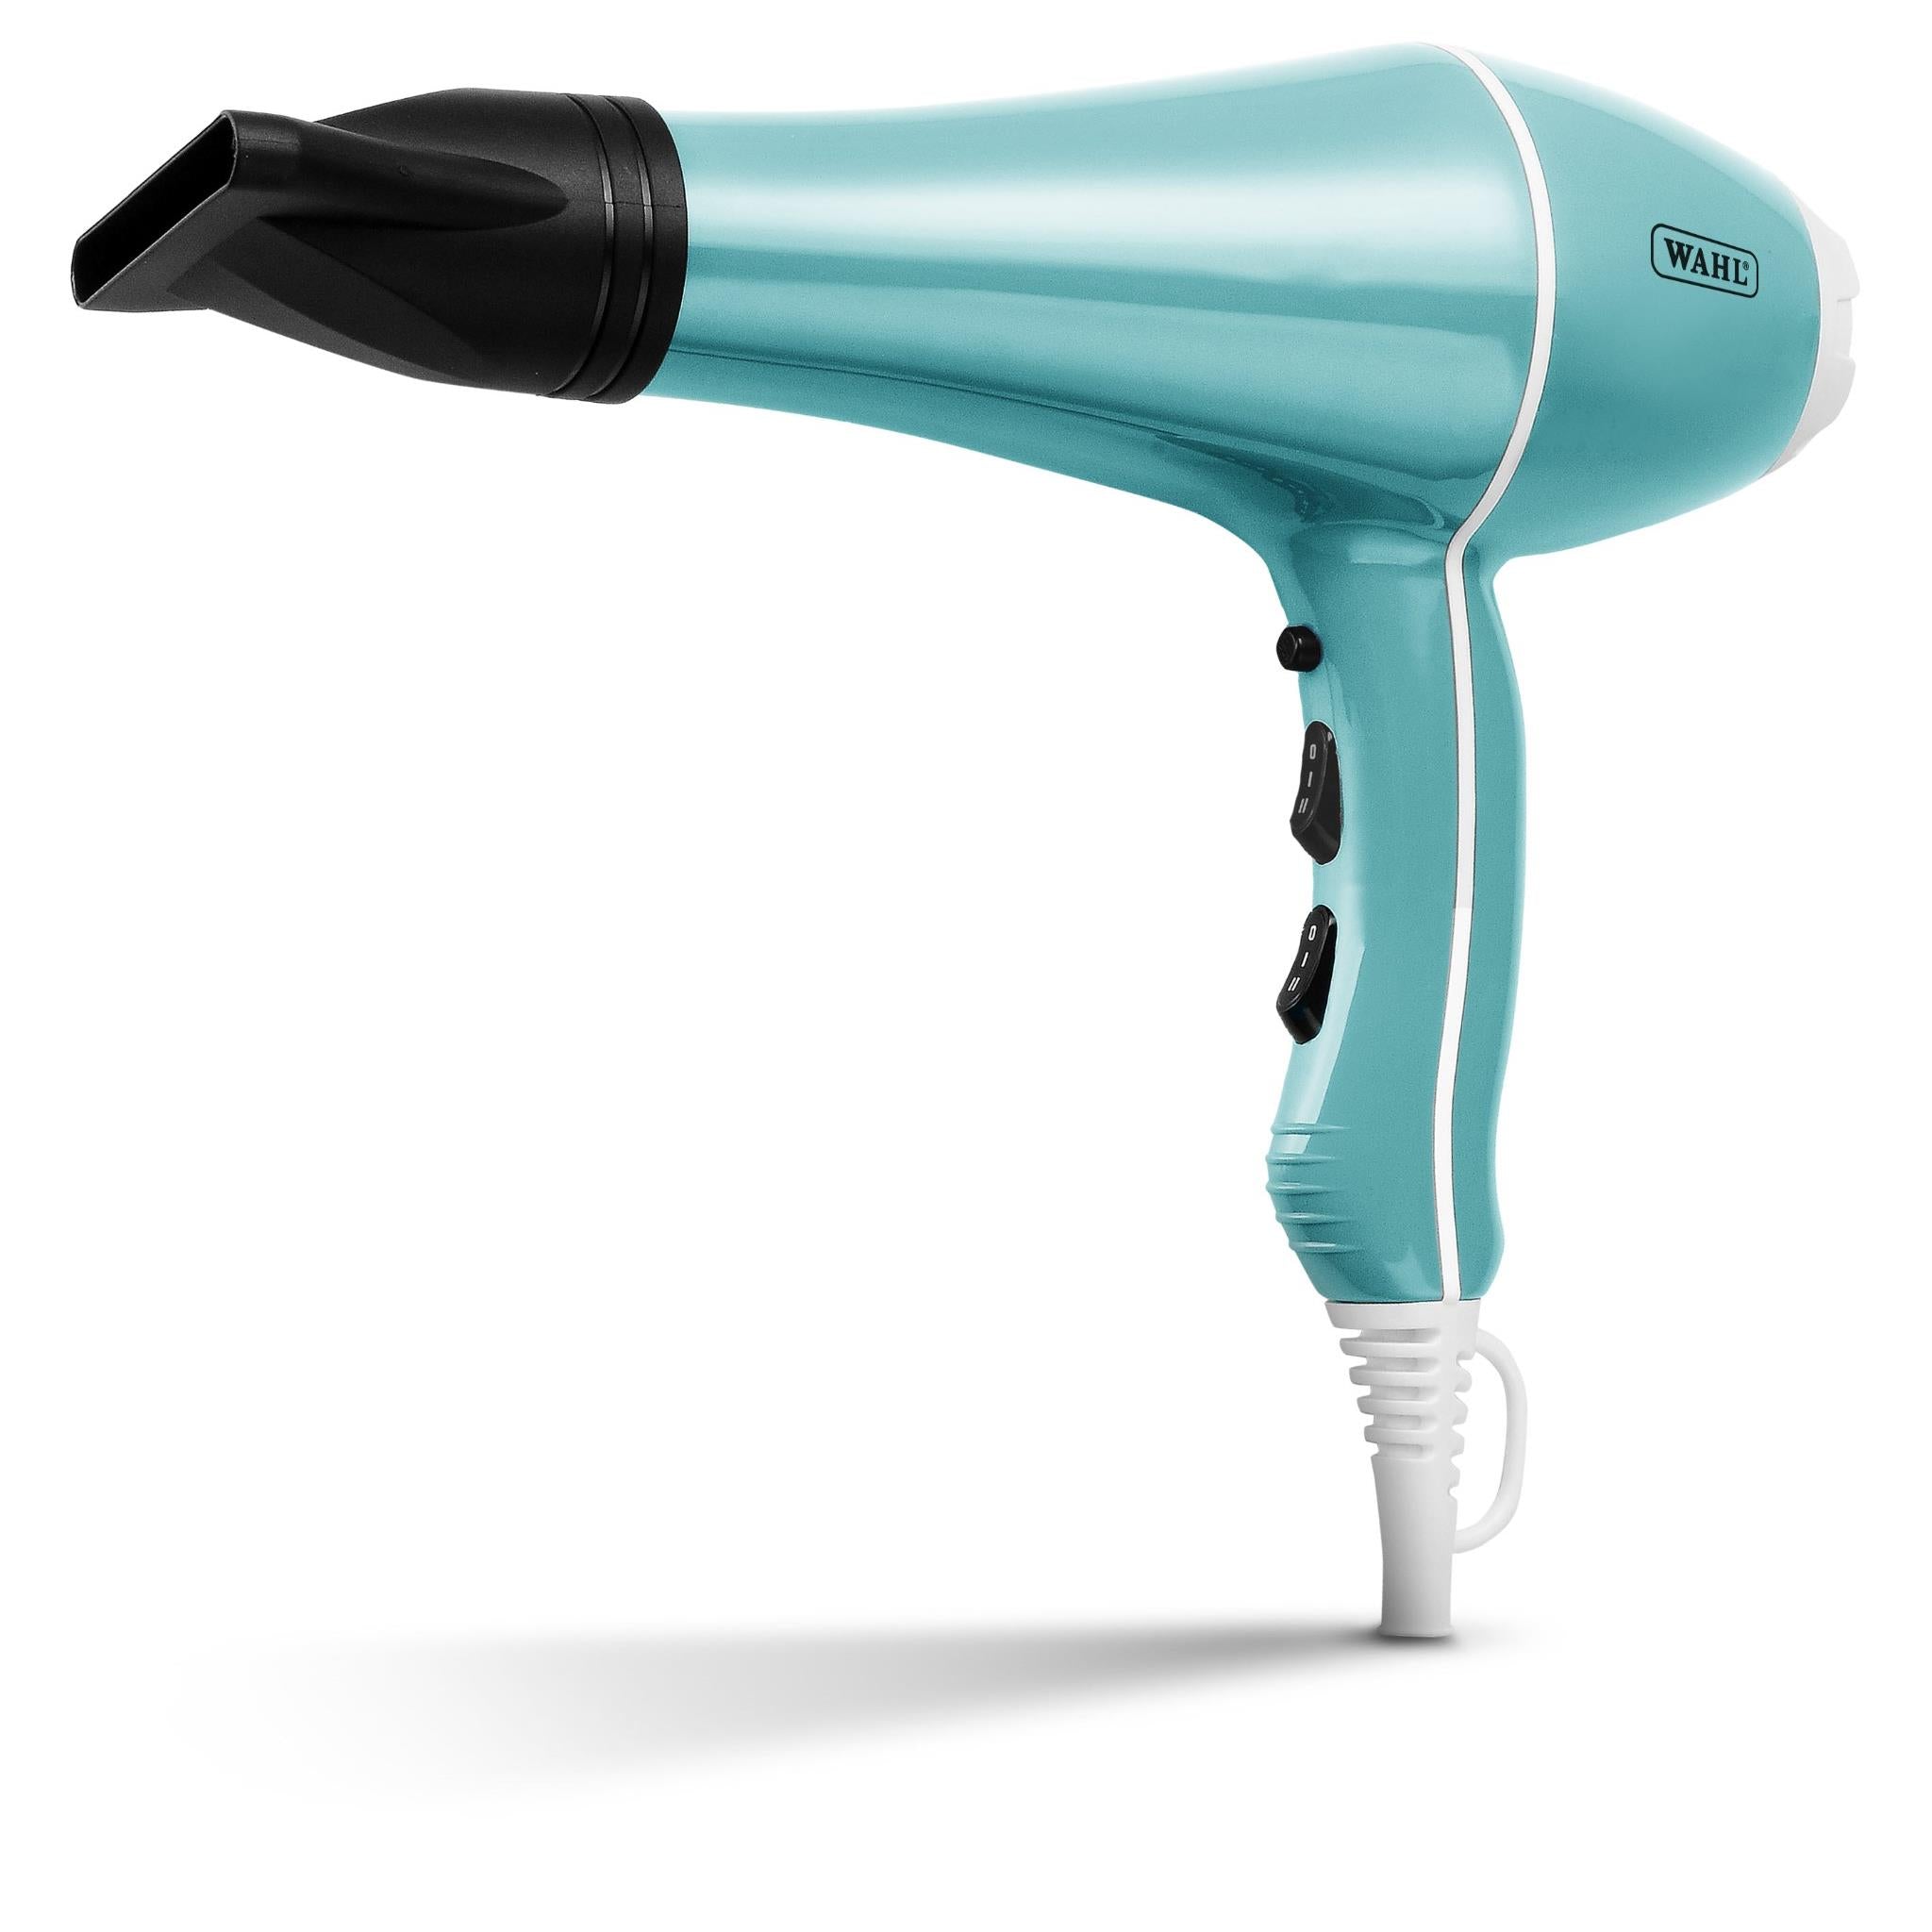 wahl designer dry hair dryer (aqua)